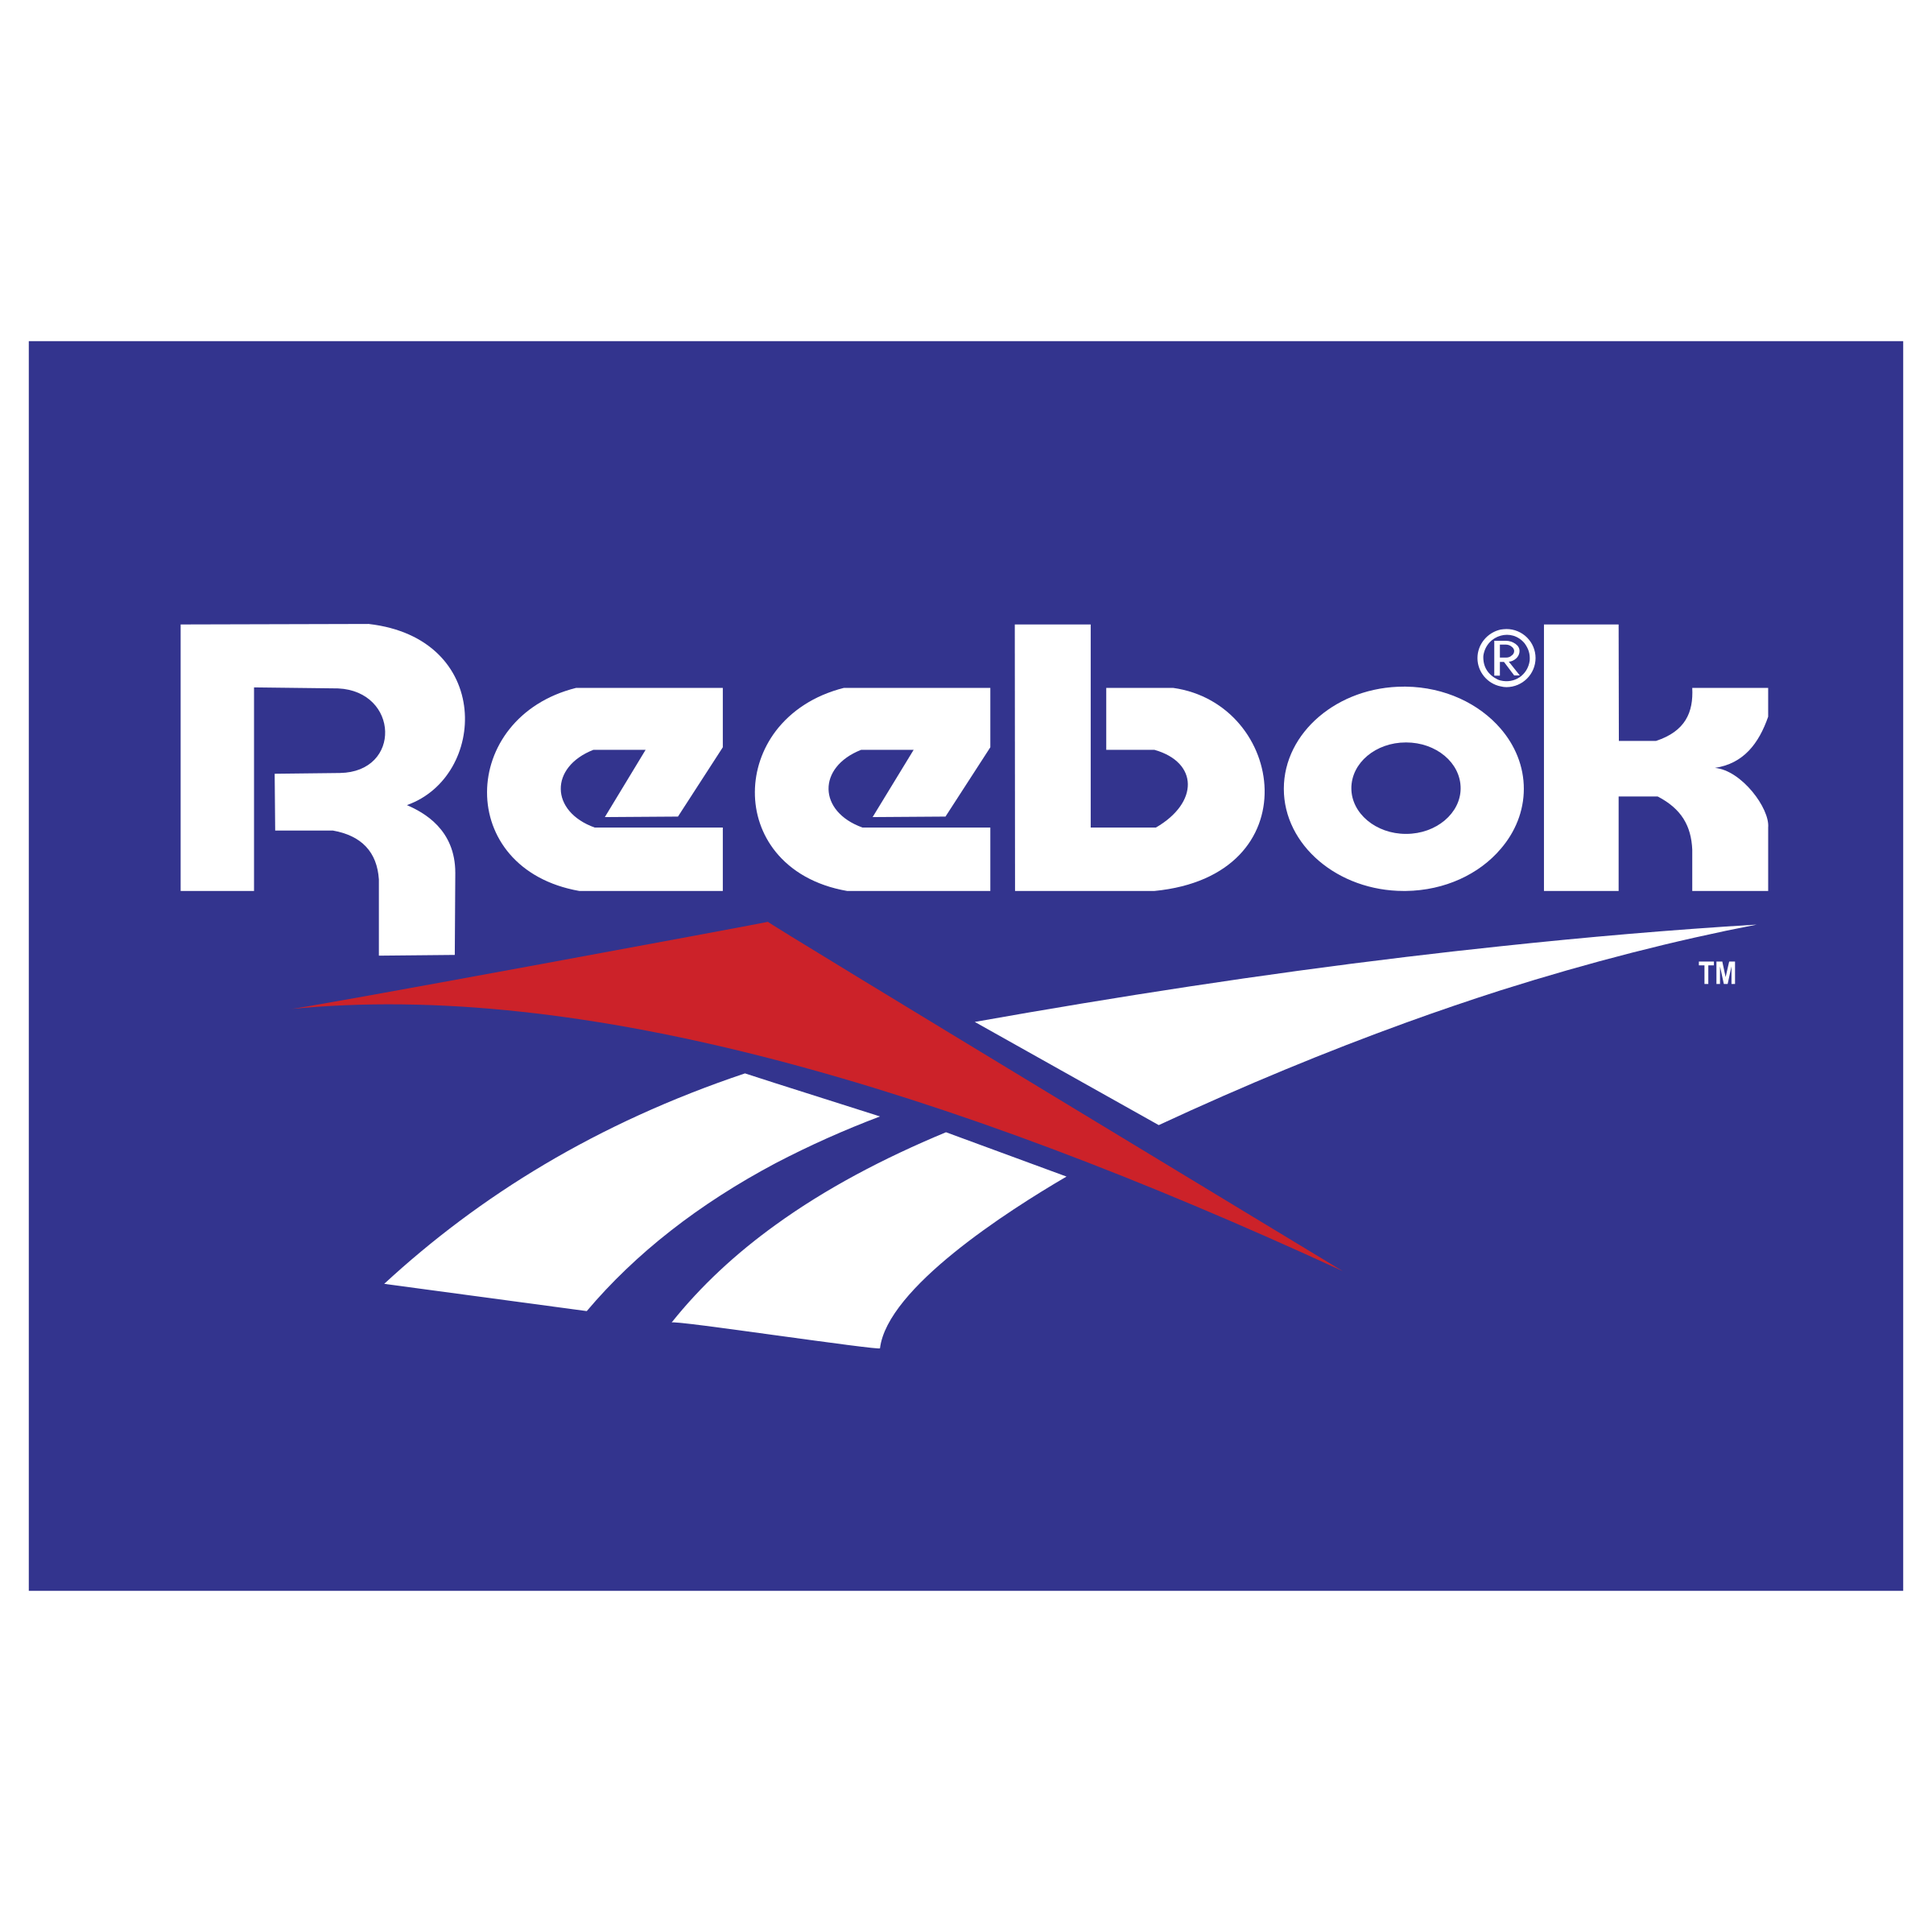 Reebok Logo - Reebok Logo PNG Transparent & SVG Vector - Freebie Supply